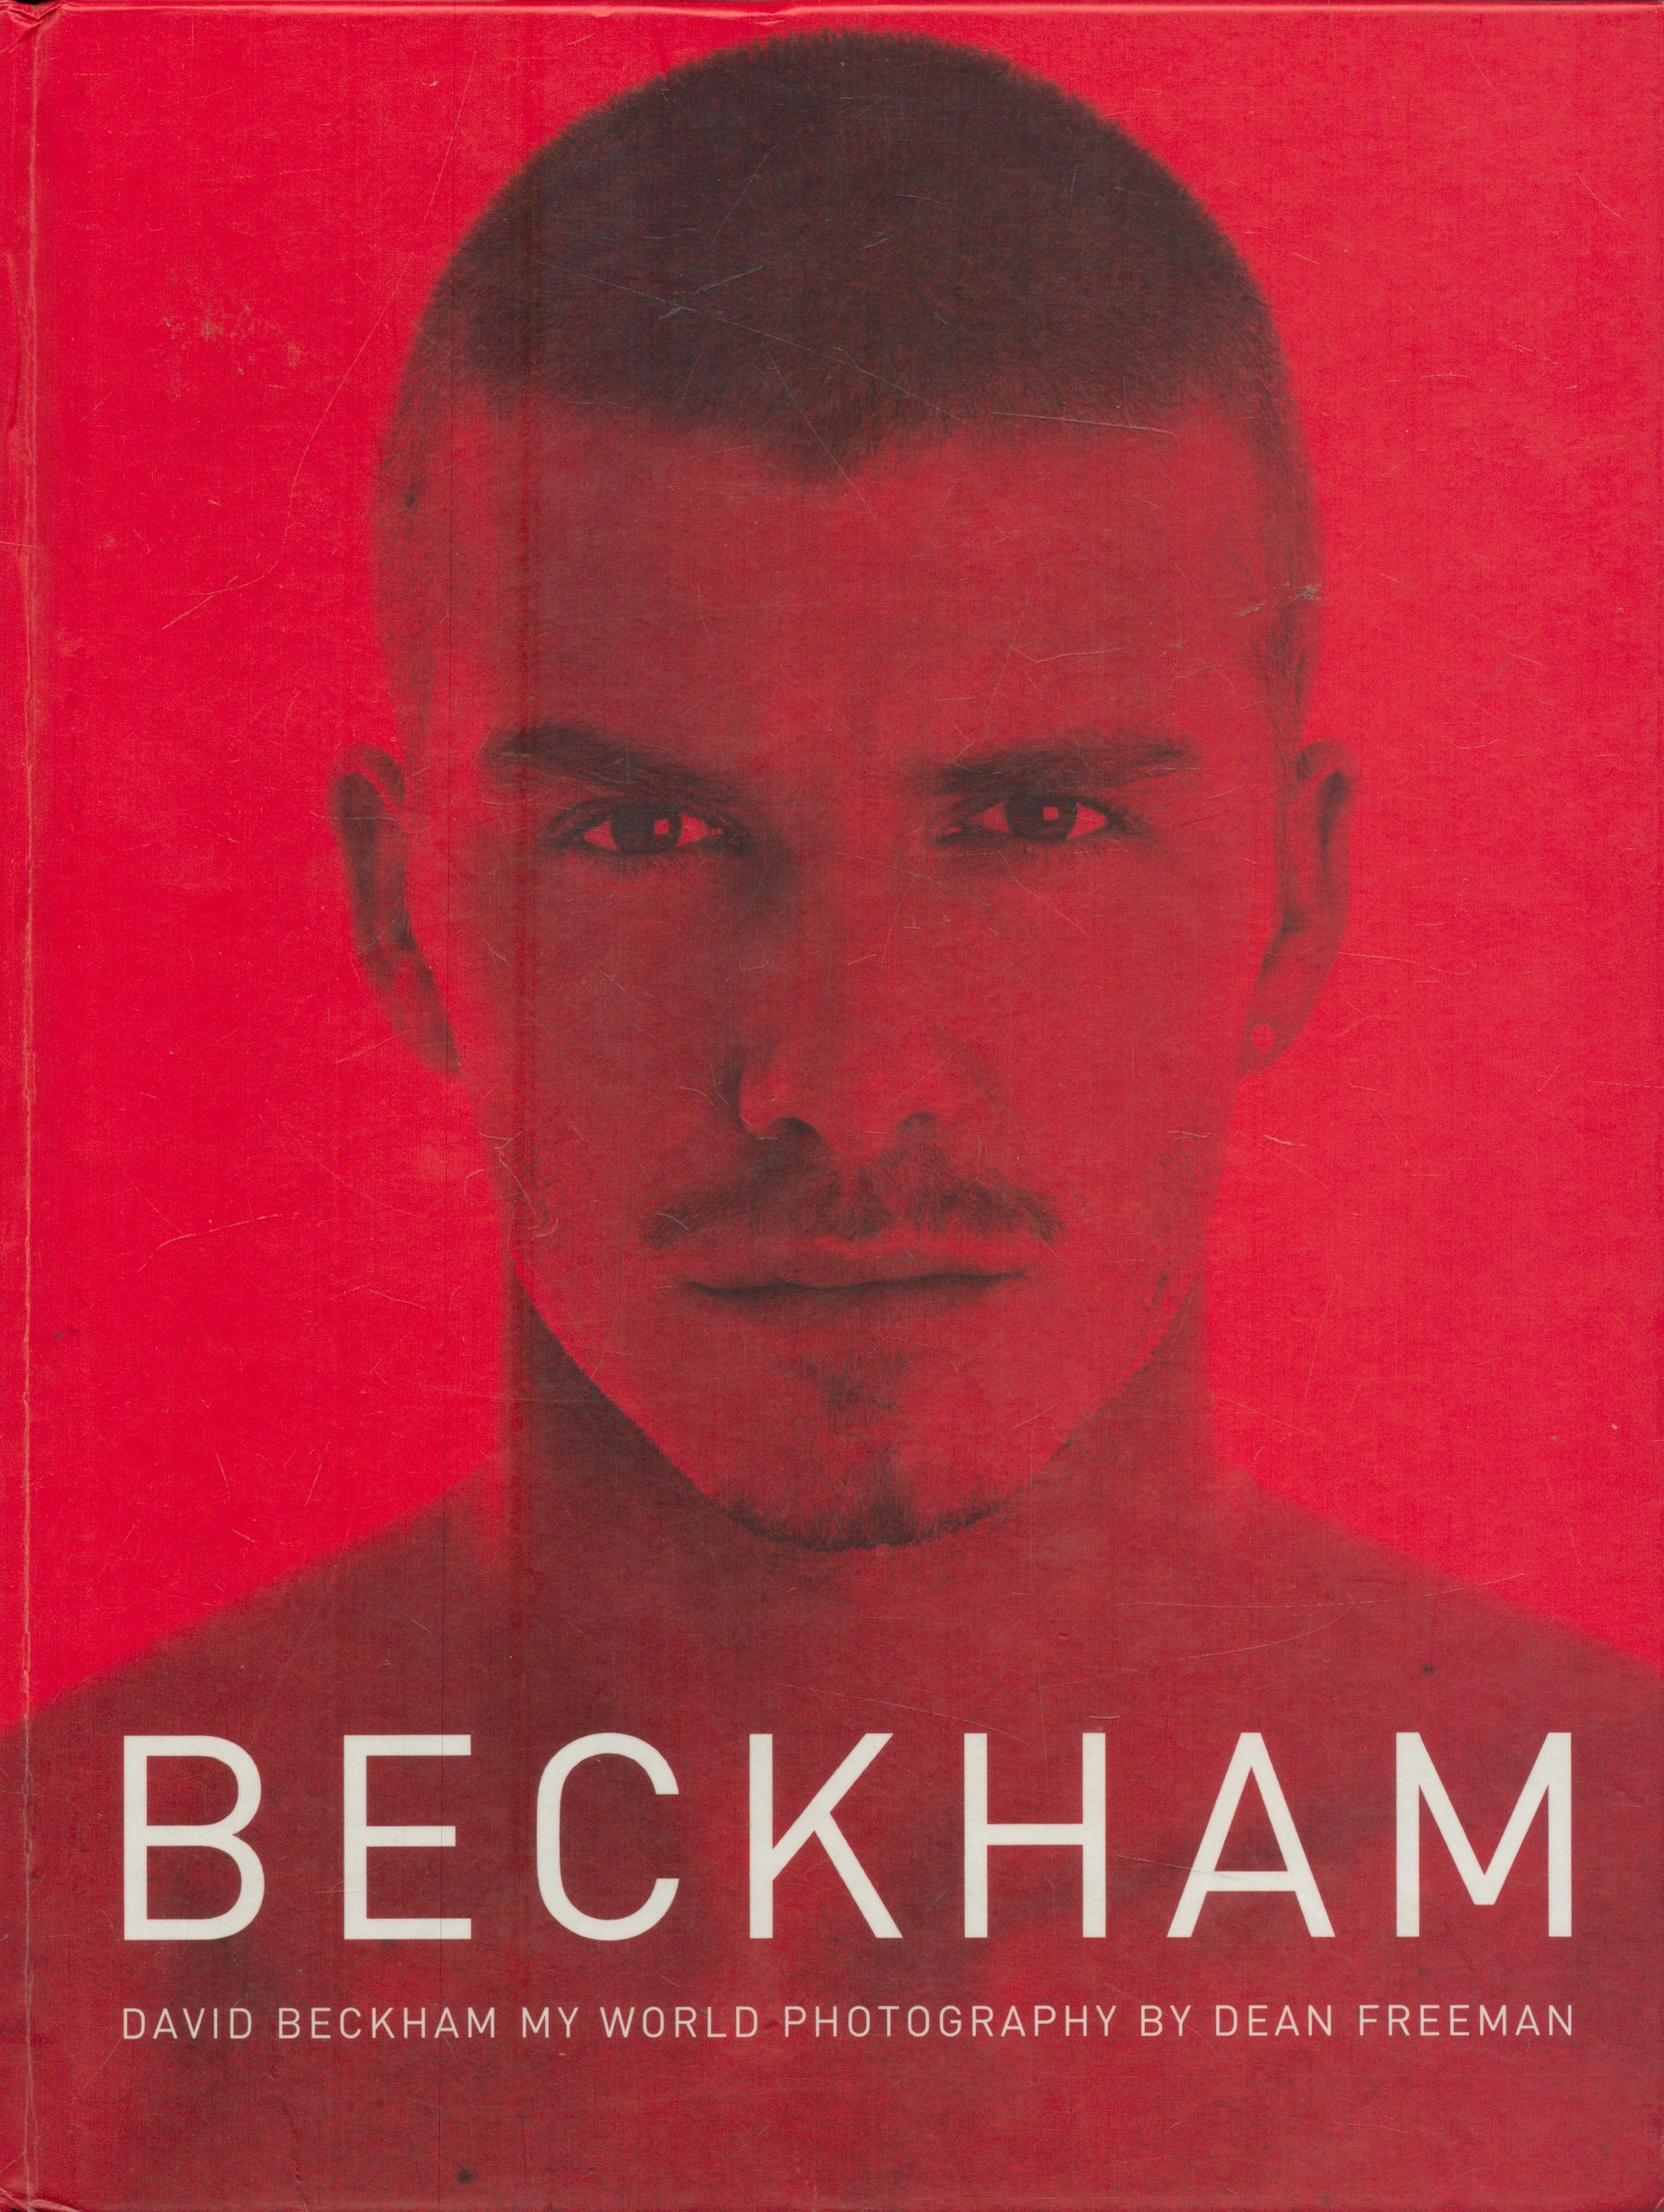 David Beckham signed photo inside front page, Beckham David Beckham my world photography by Dean